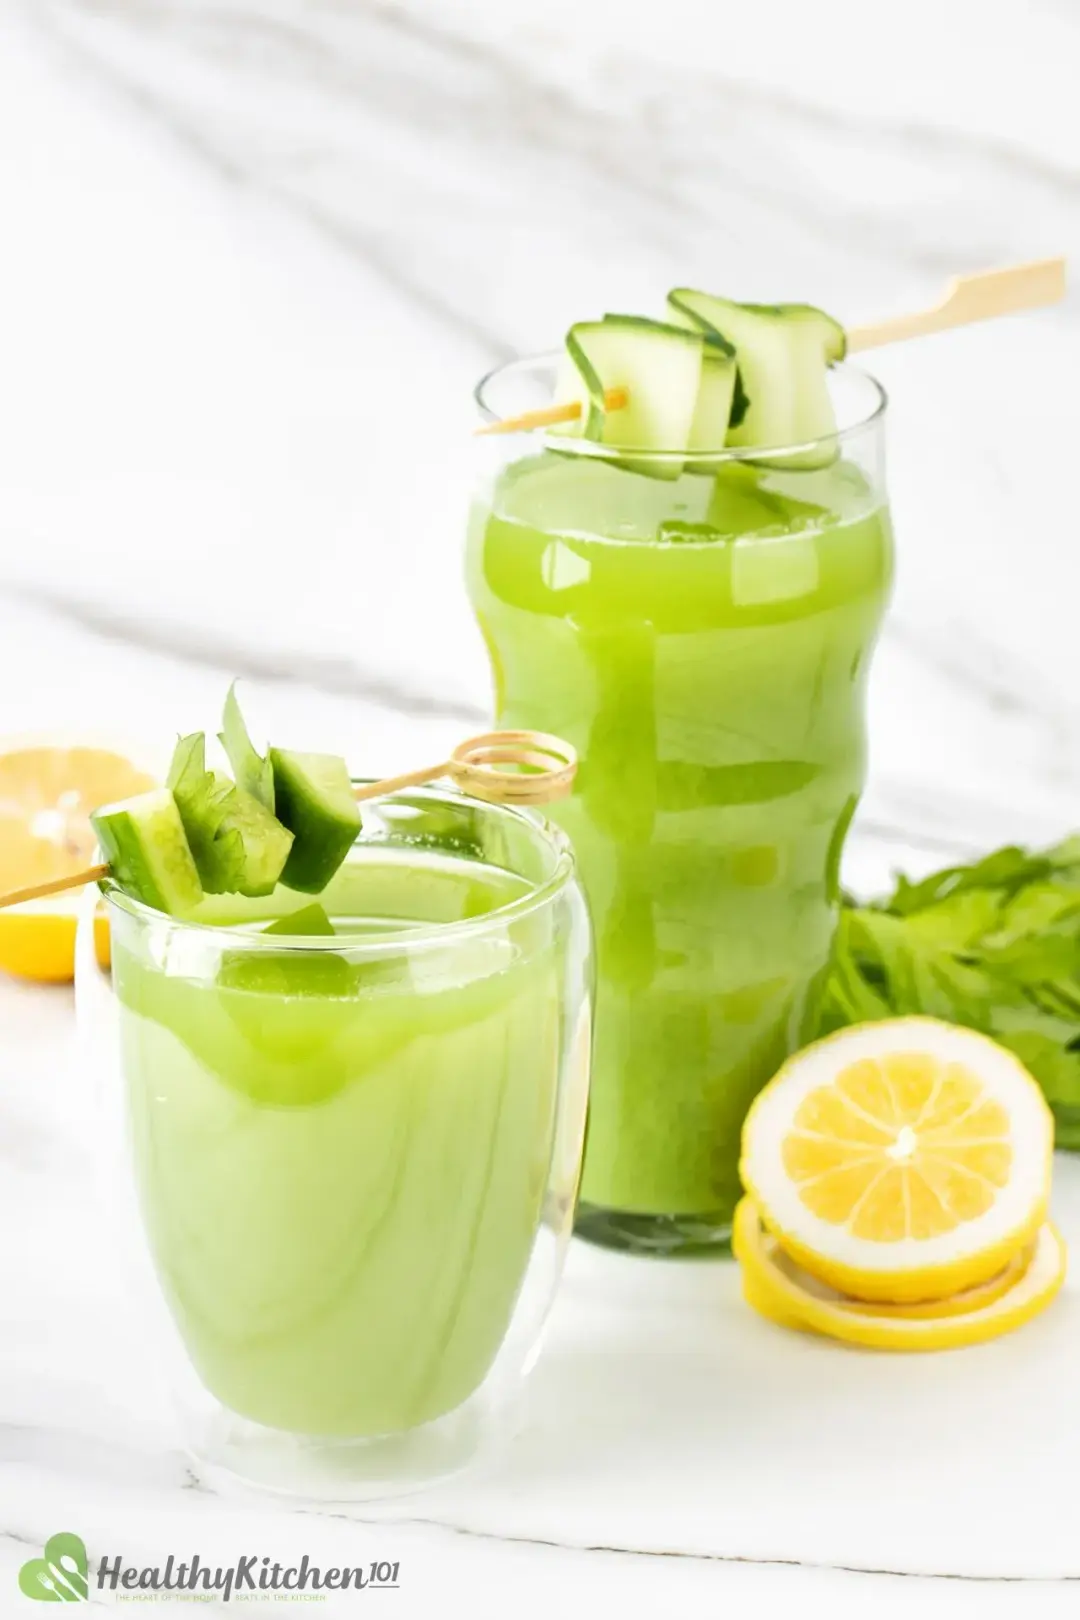 Benefits of Celery Cucumber Juice